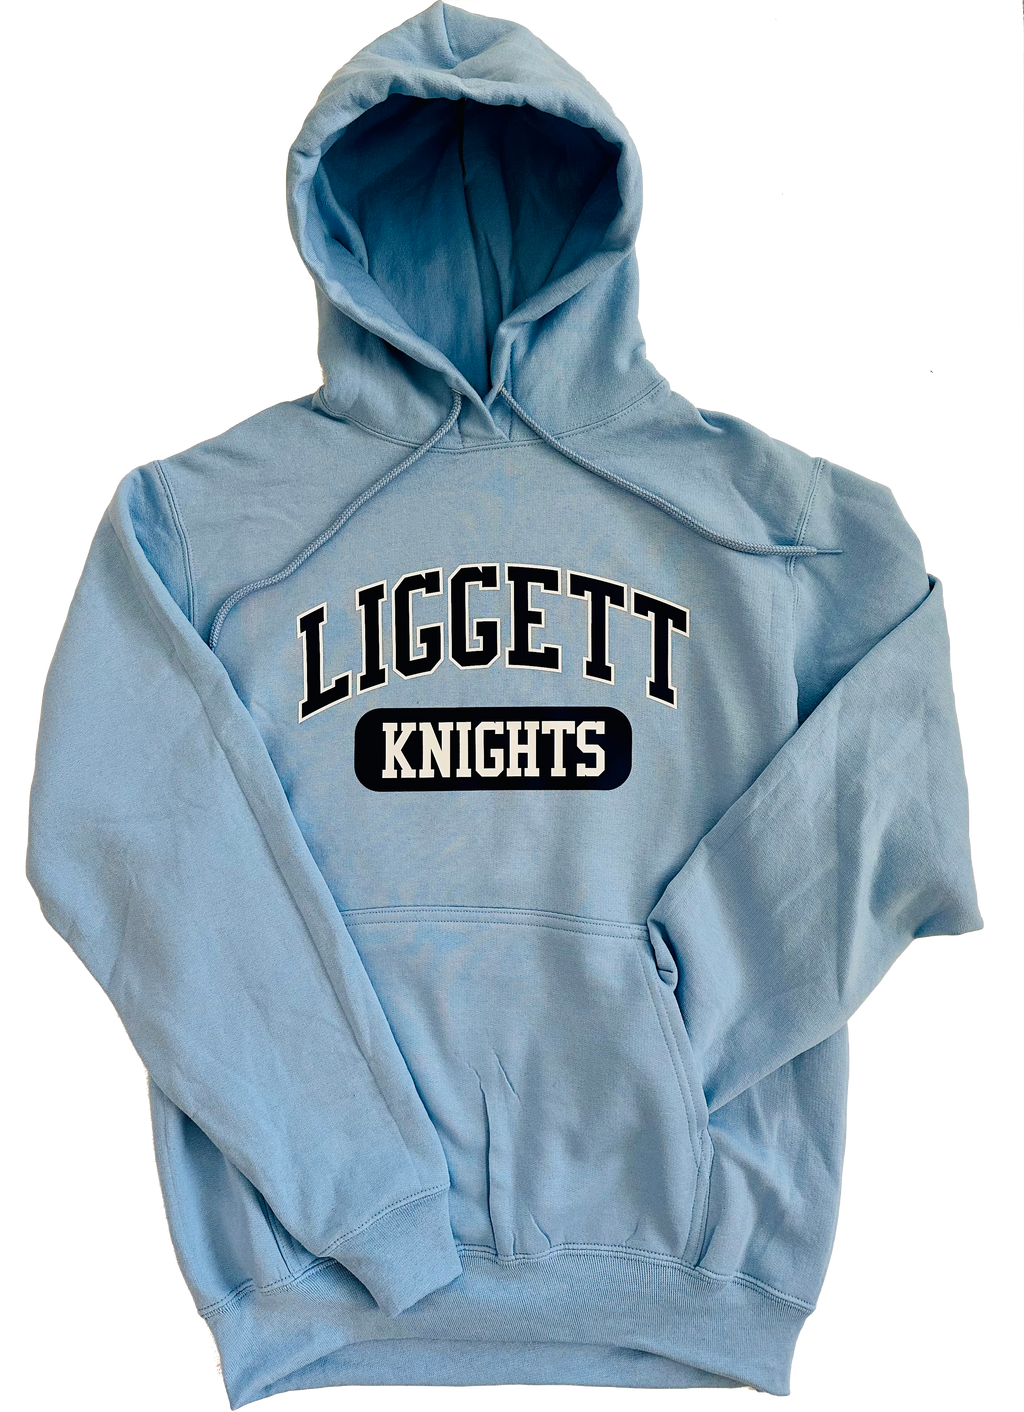 NEW Adult Liggett Knights Light Blue Hoodie